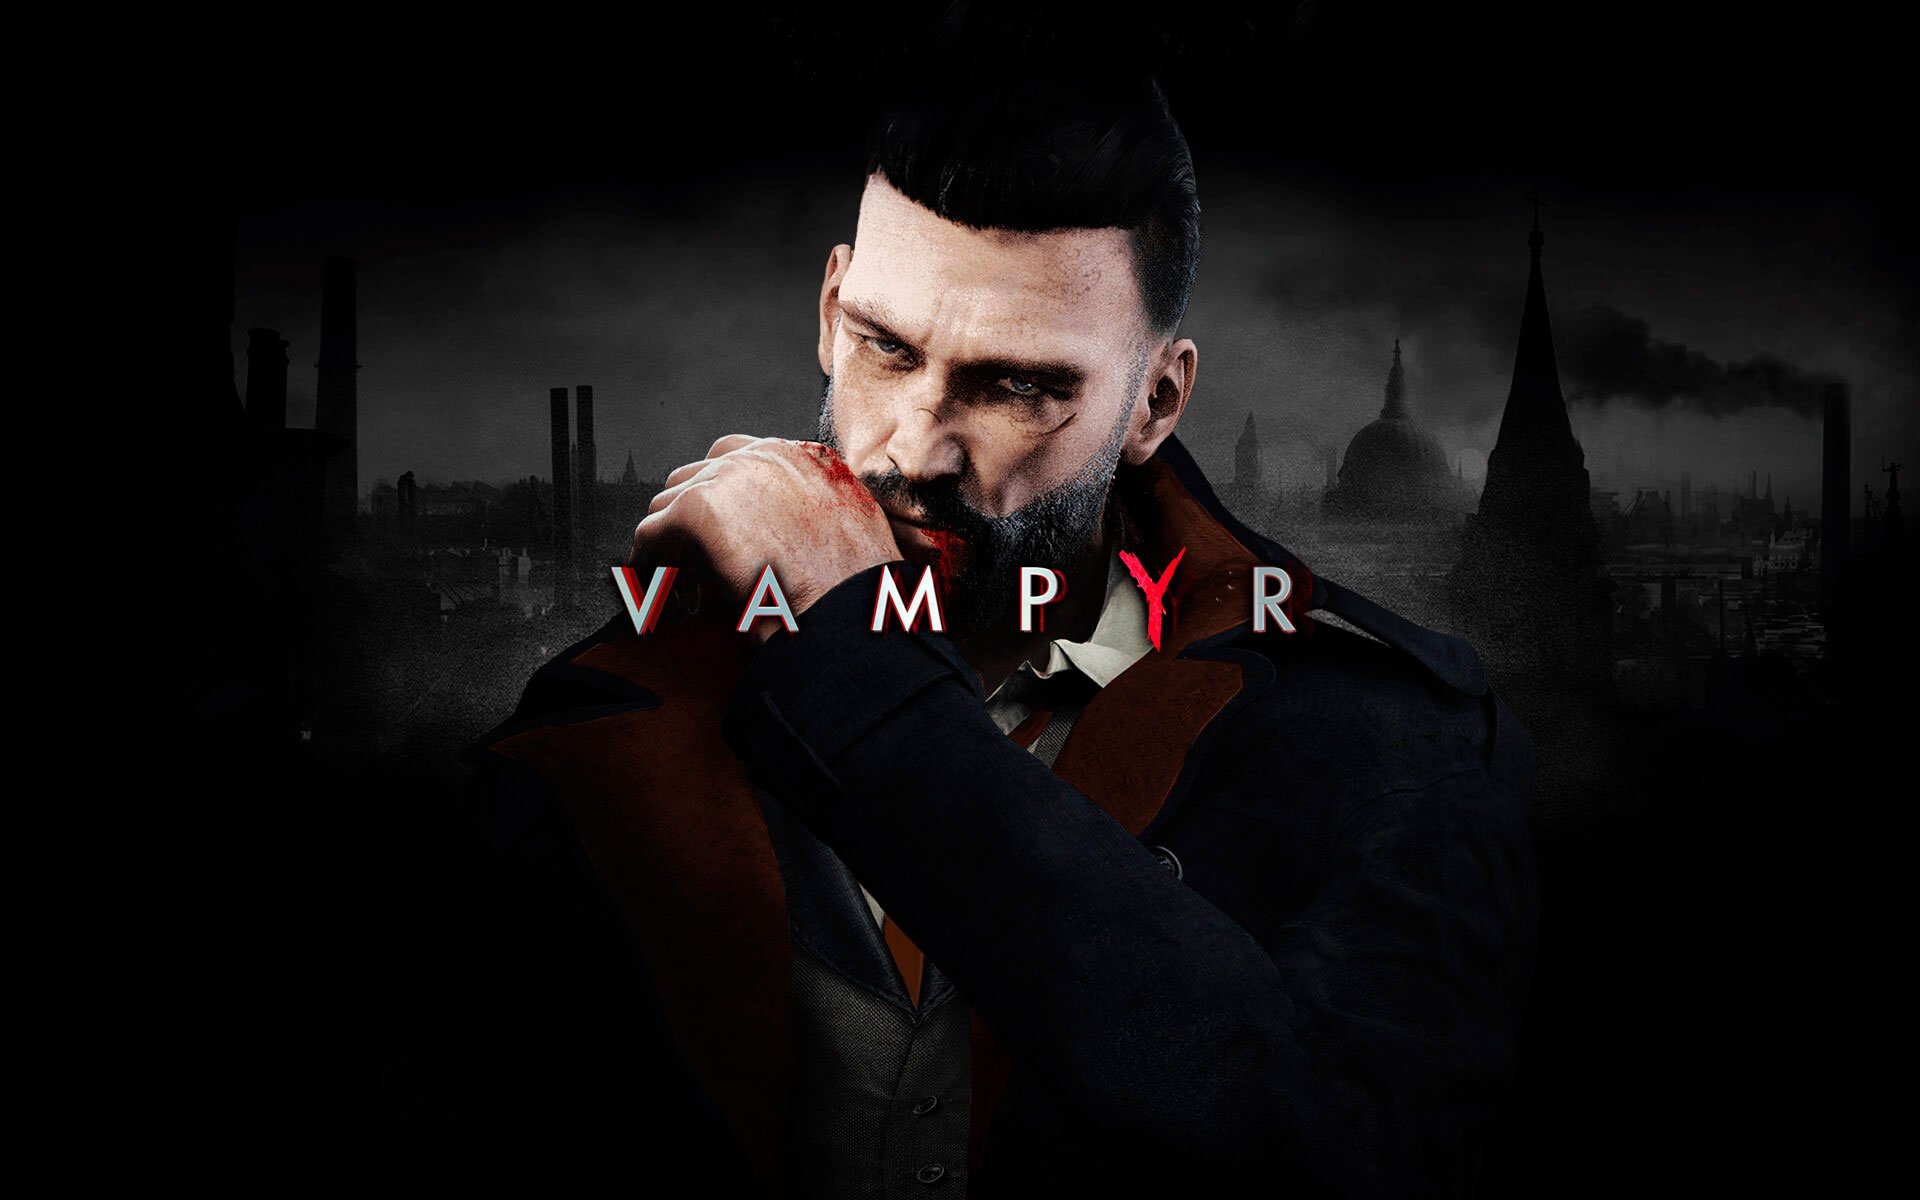 Vampyr por R$ 149.9